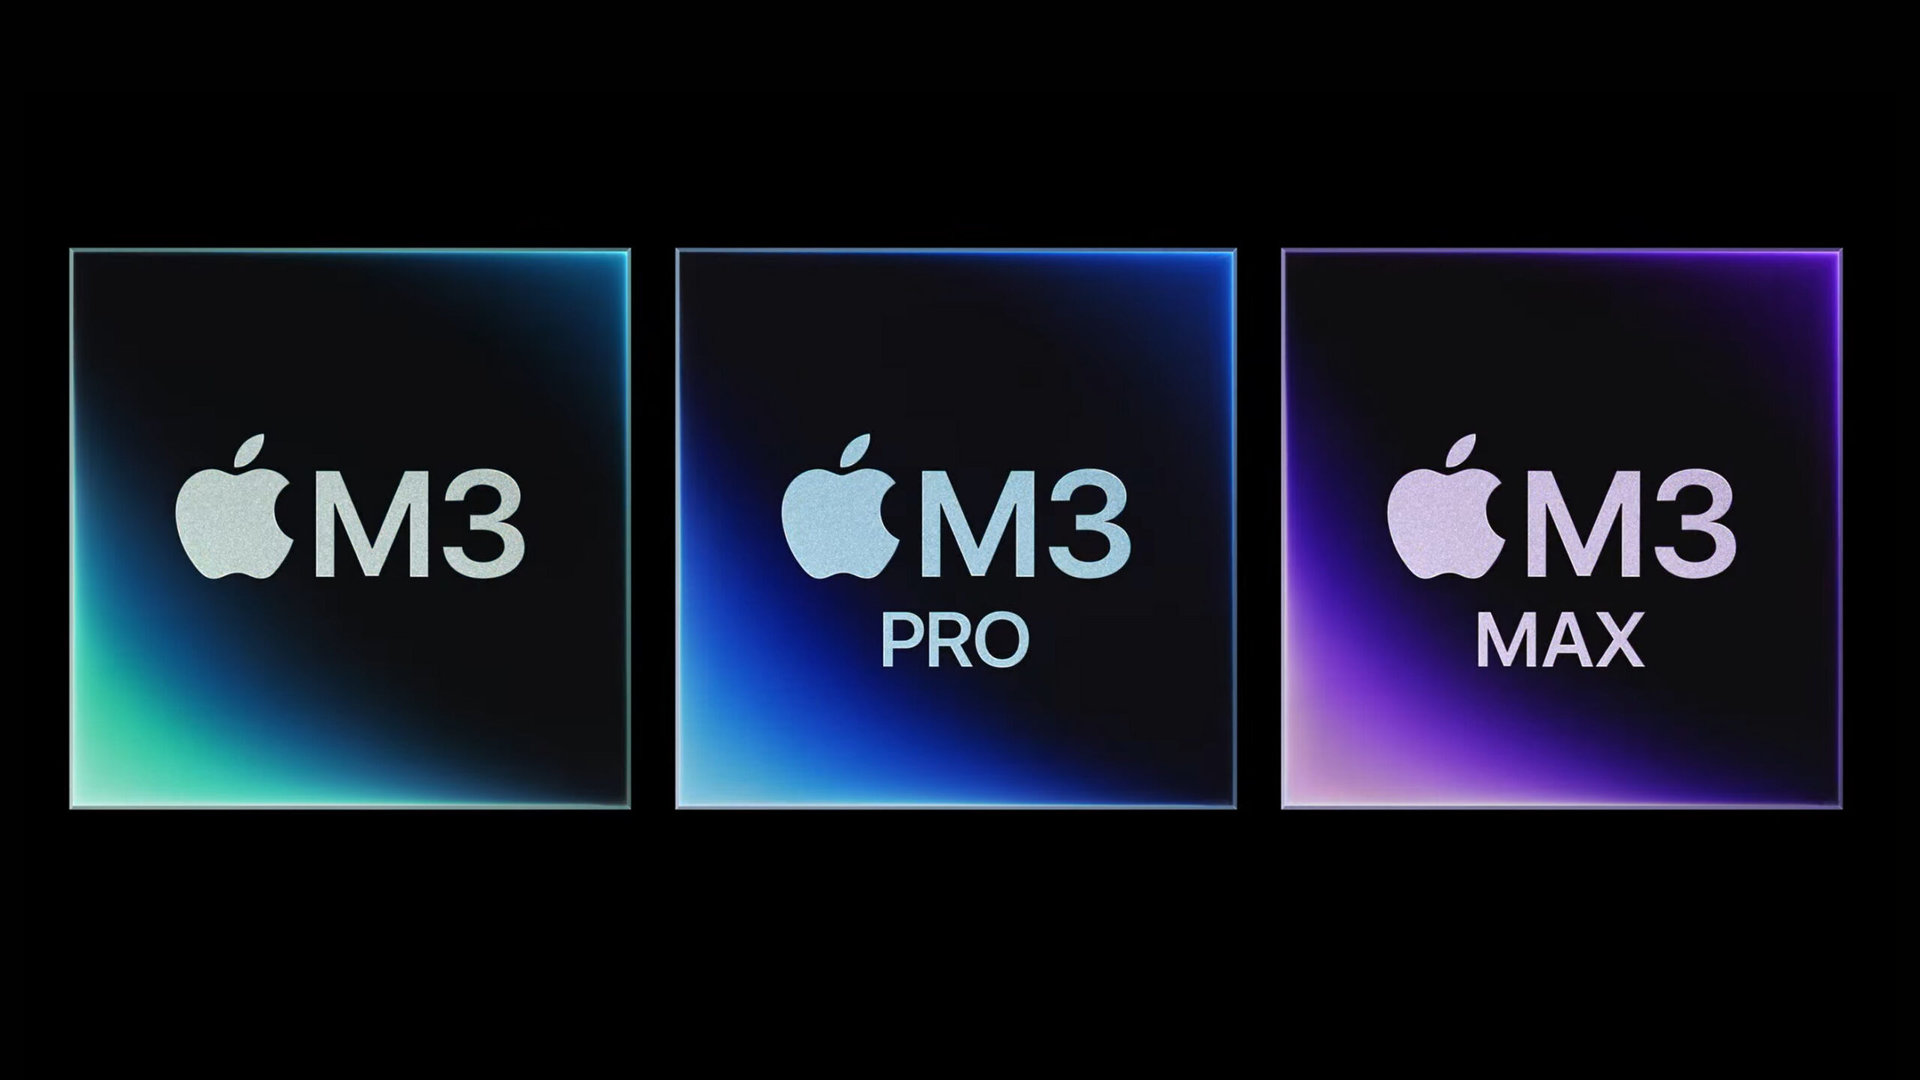 Apple M3 Processor Family